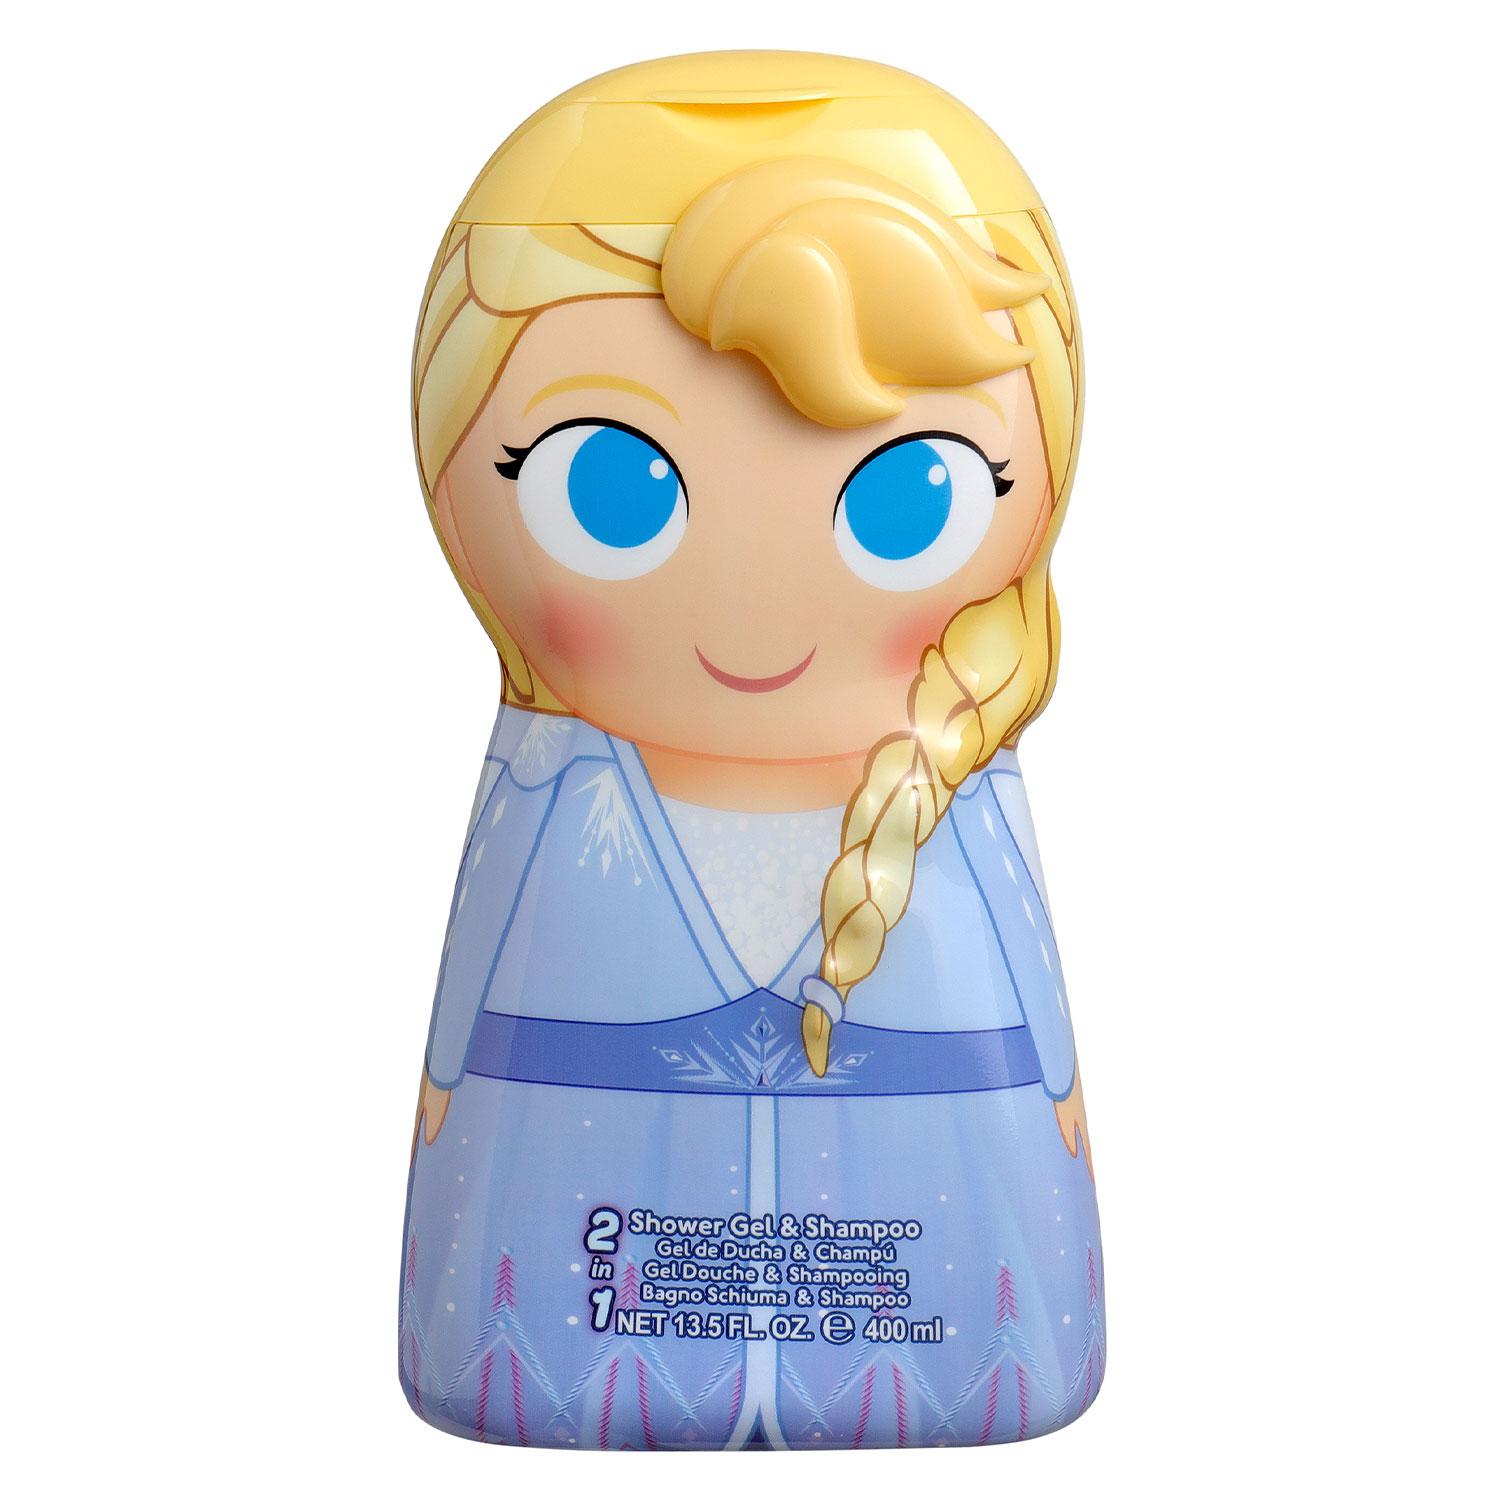 Kids Shower Gels - Disney Frozen Elsa Shower Gel 2in1